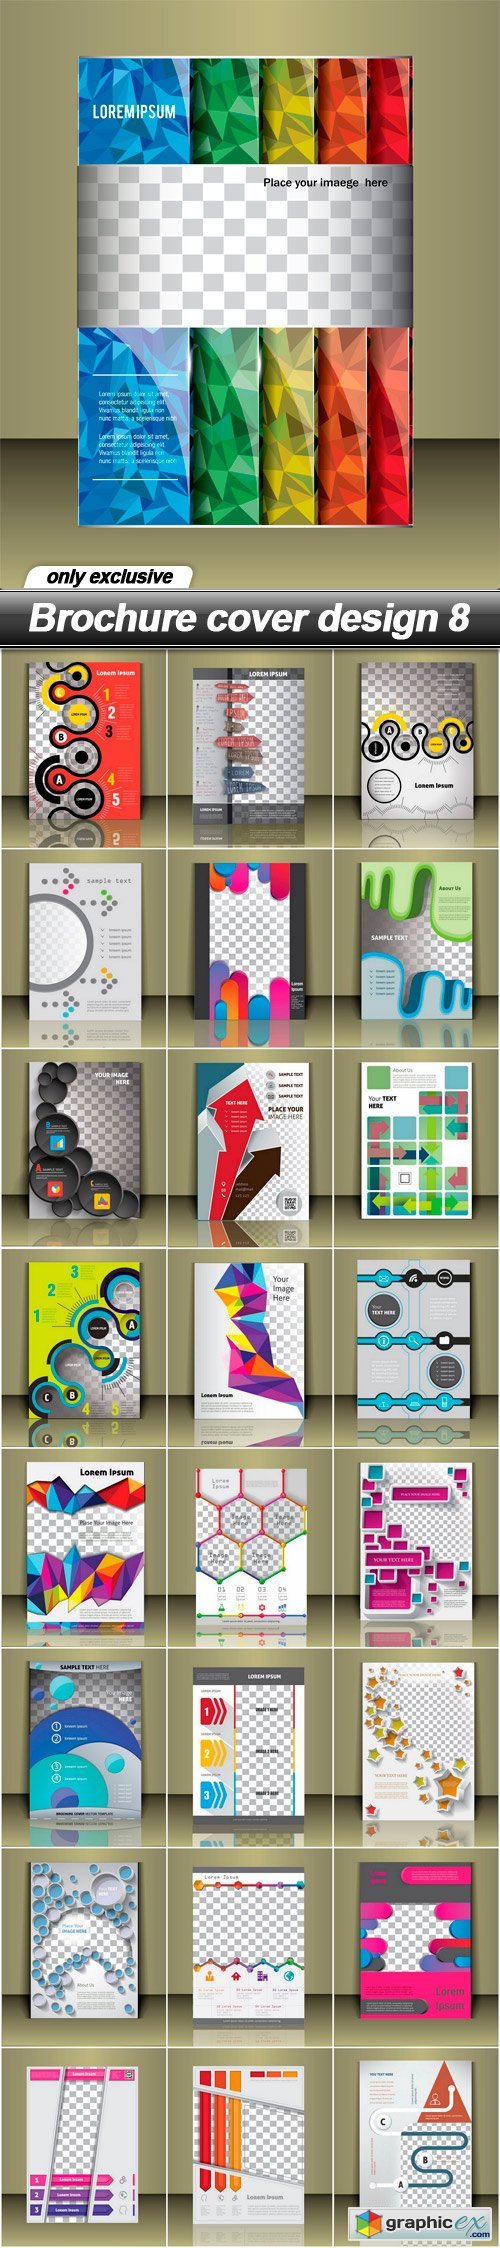 Brochure cover design 8 - 25 EPS